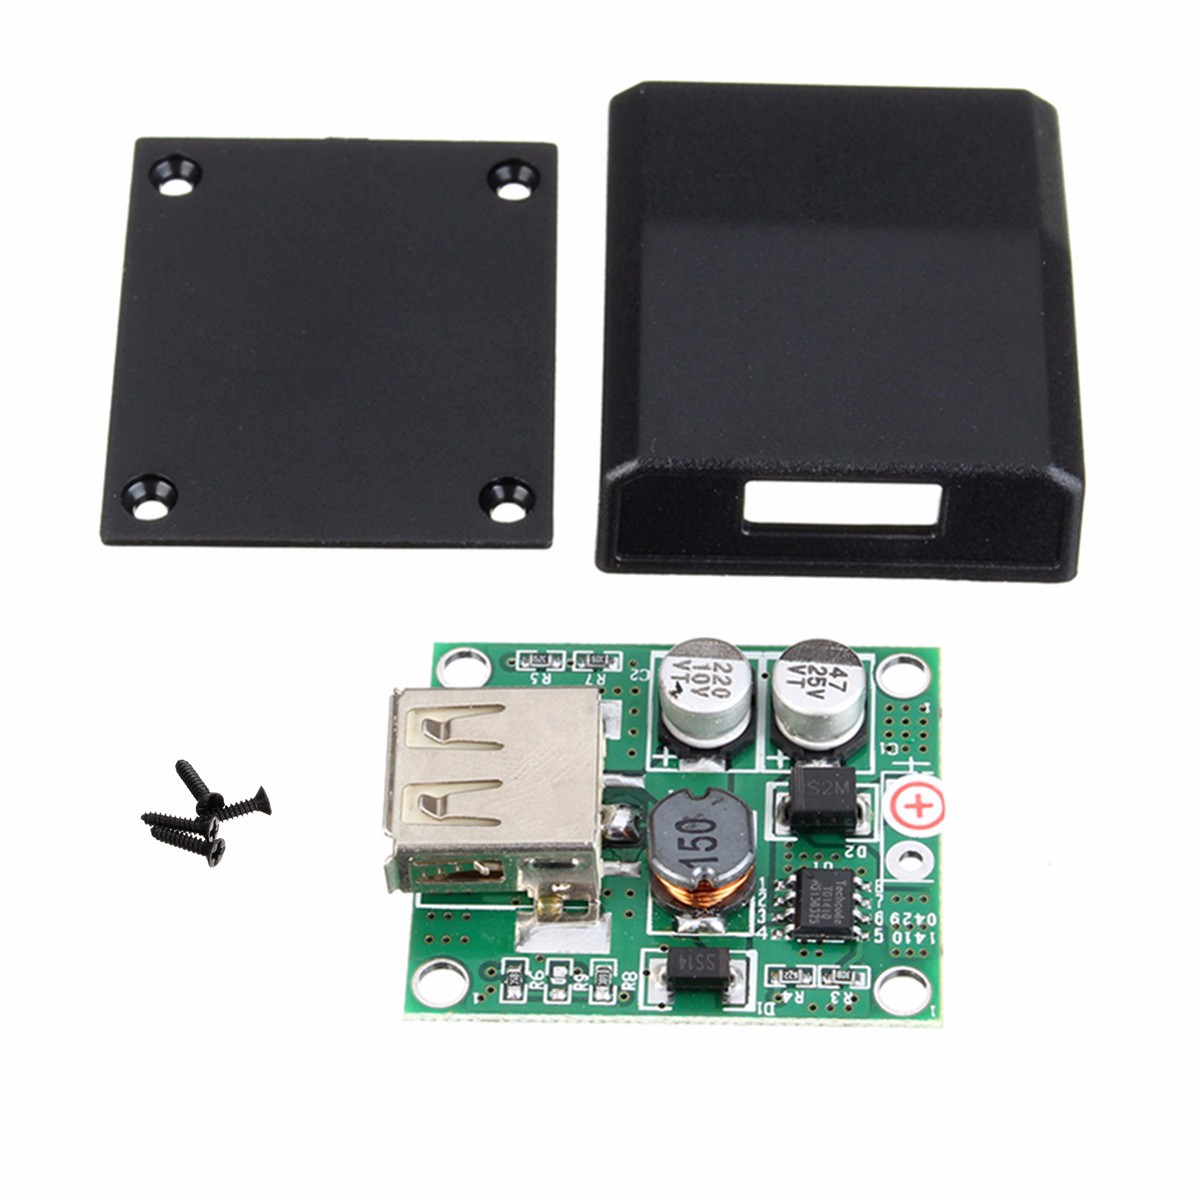 5pcs DIY 5V 2A Voltage Regulator Junction Box Solar Panel Charger Special Kit For Electronic Production 7